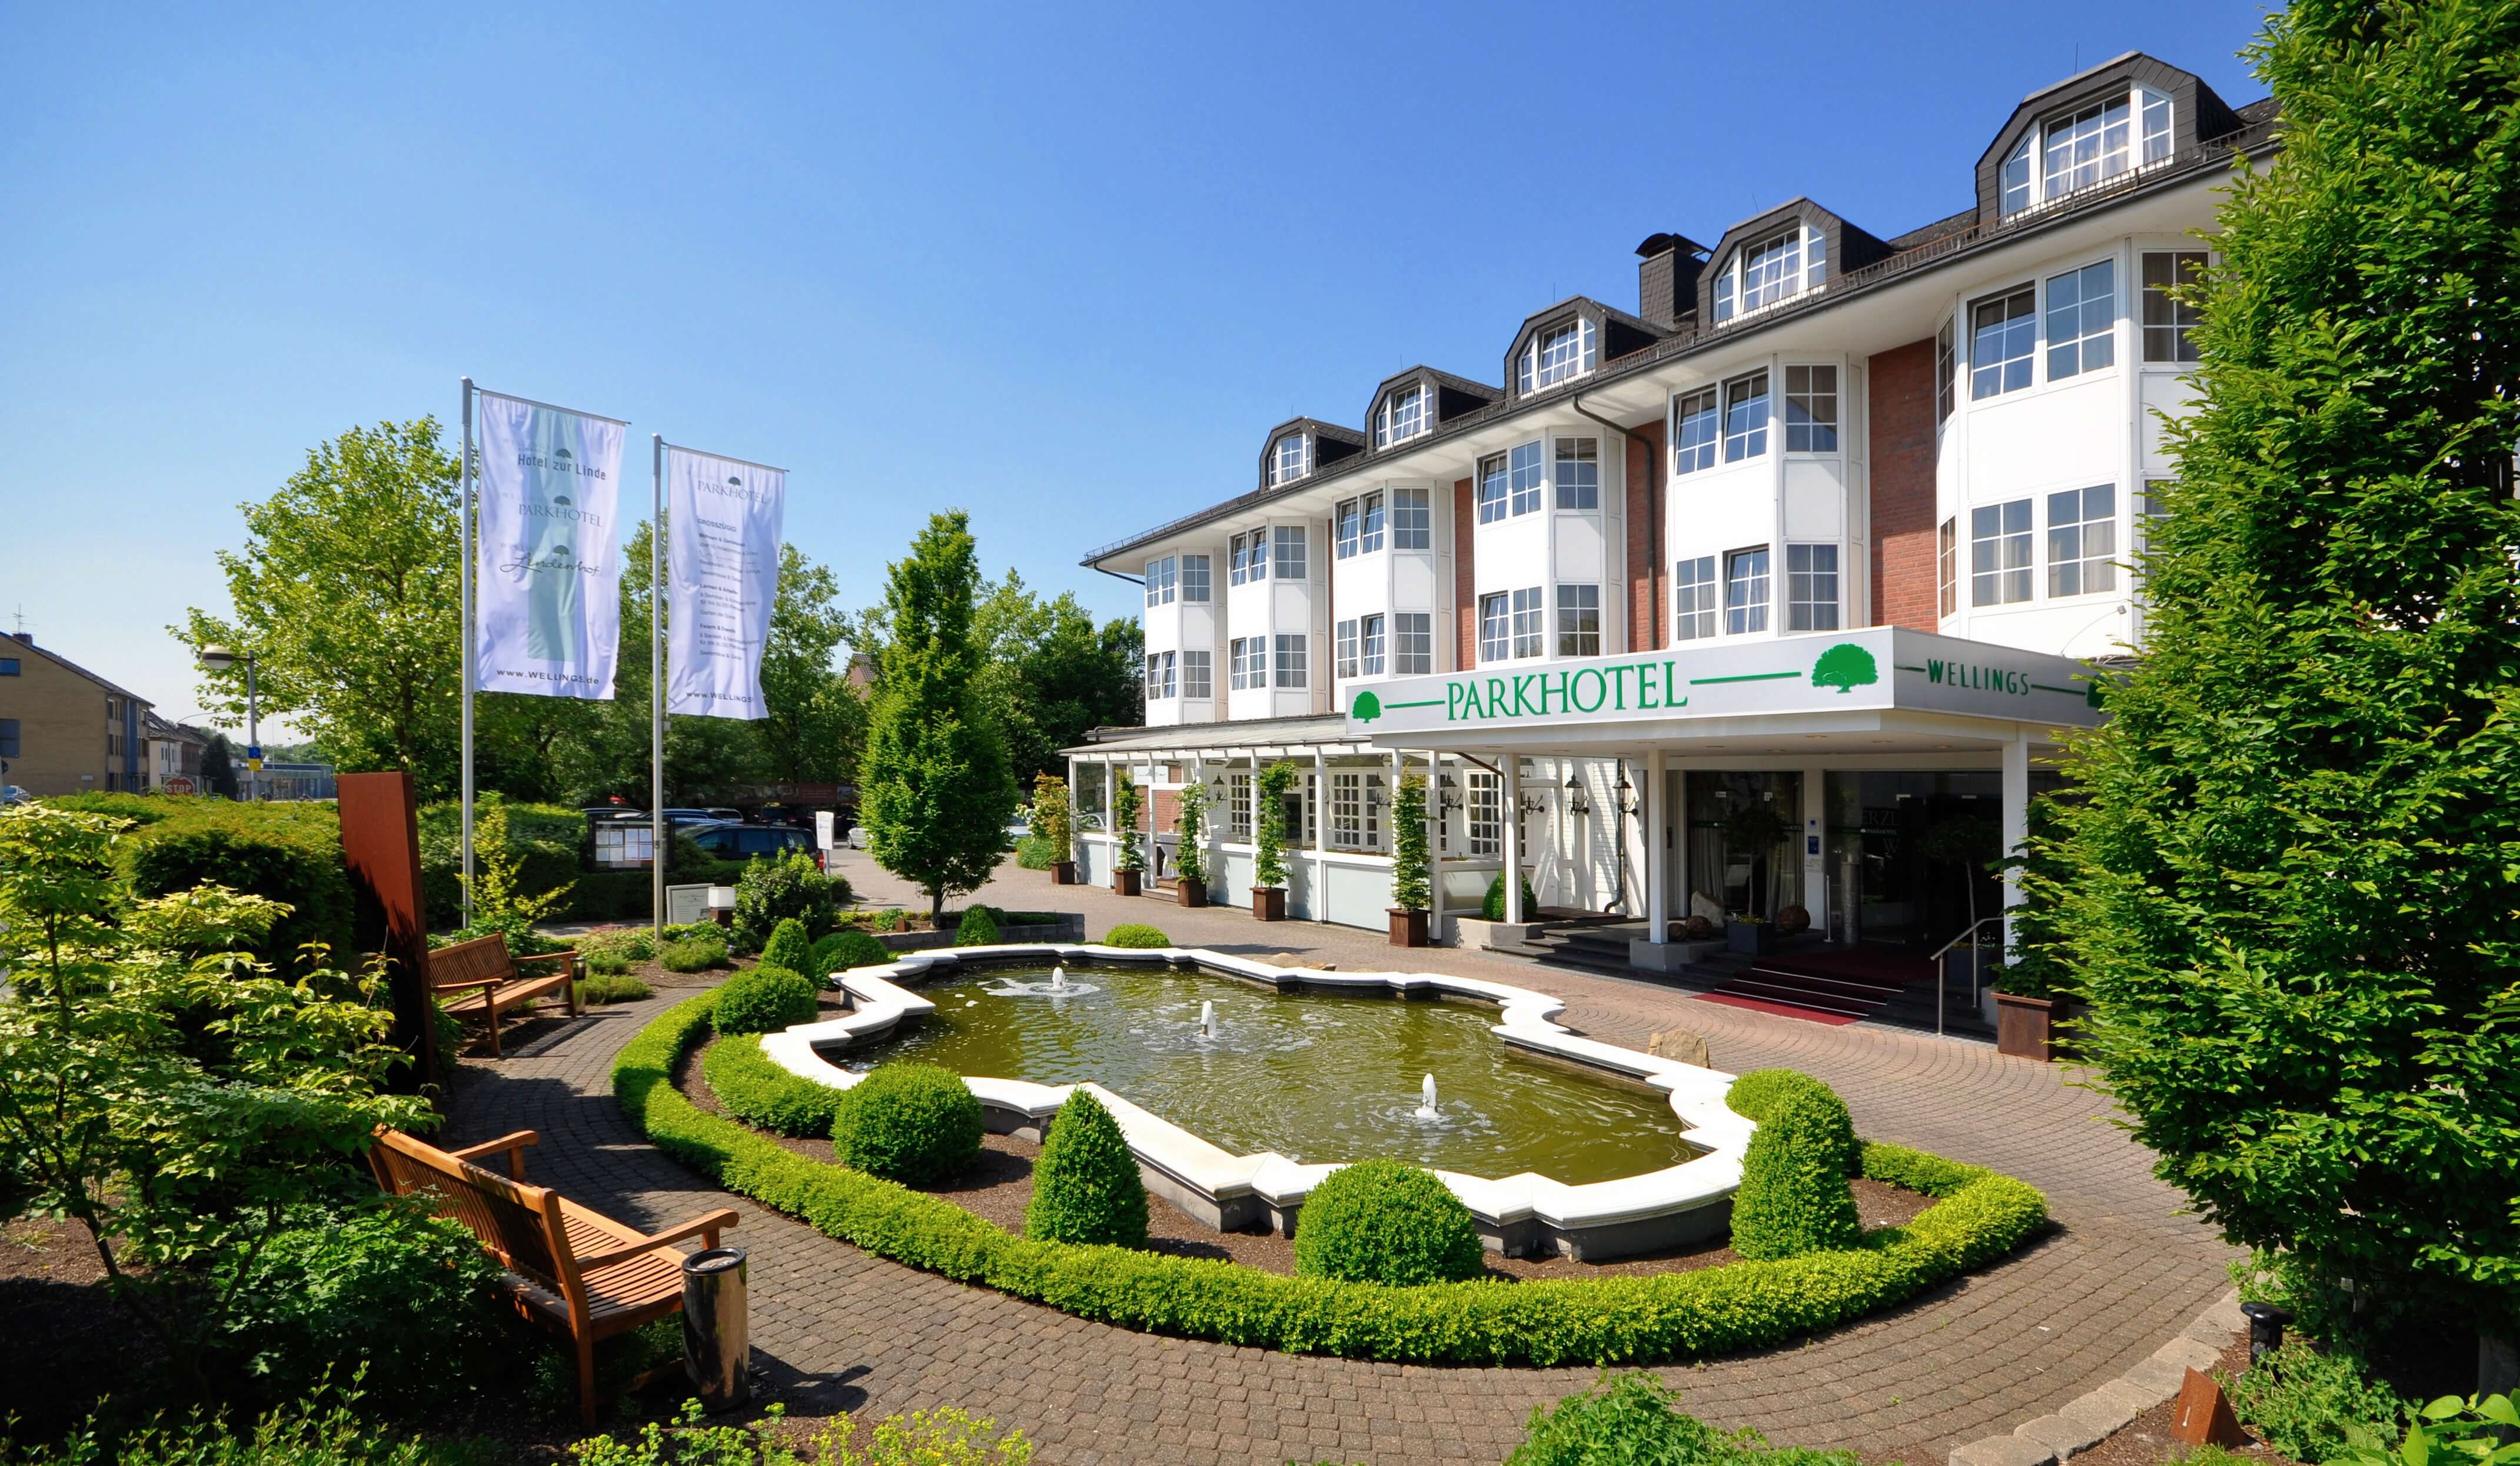 Titelbild des Unternehmens: Wellings Parkhotel in Kamp-Lintfort